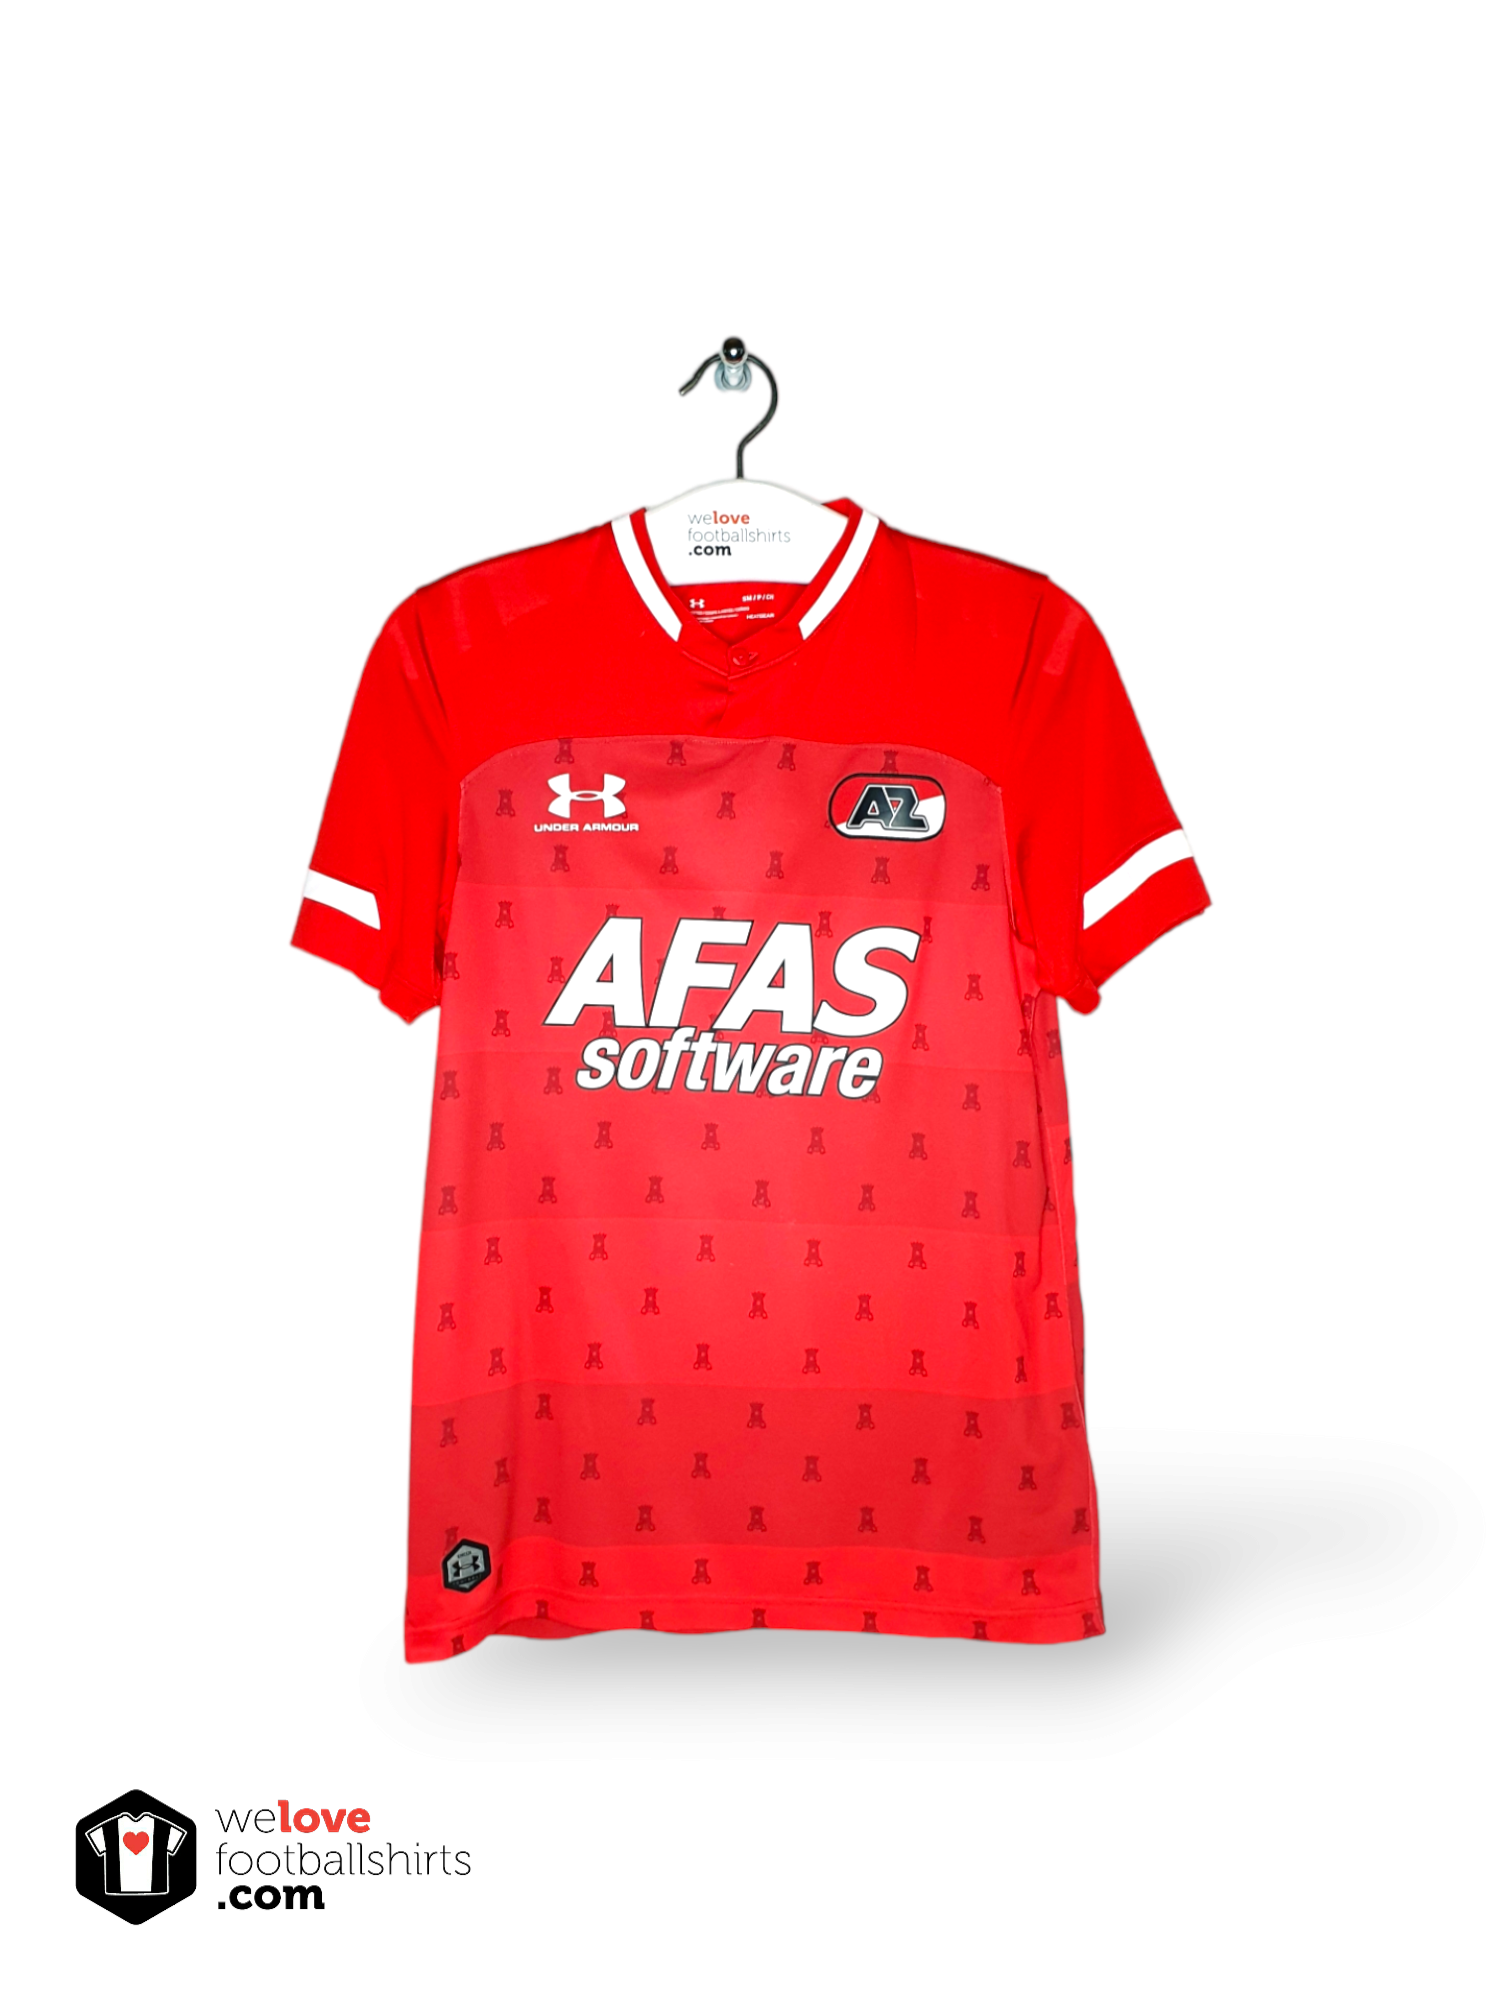 Kalmte slaaf het formulier Under Armour Football Shirt AZ Alkmaar 2017/18